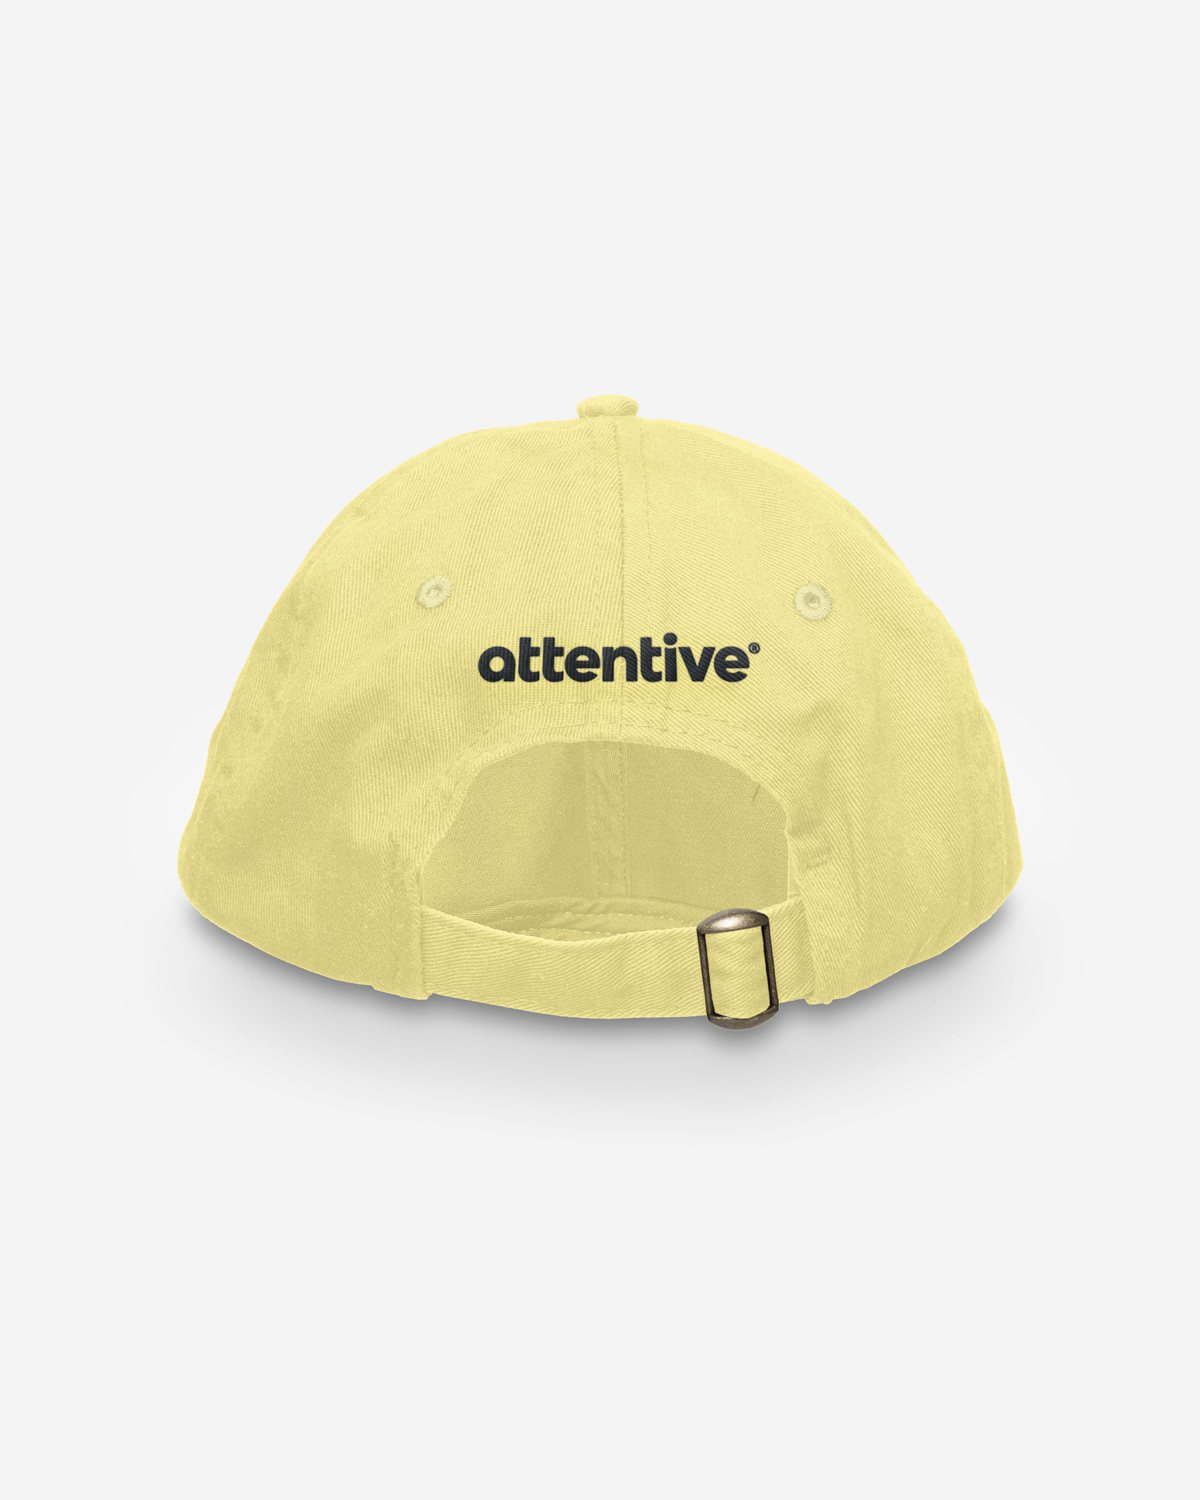 Attentive Yellow Cap